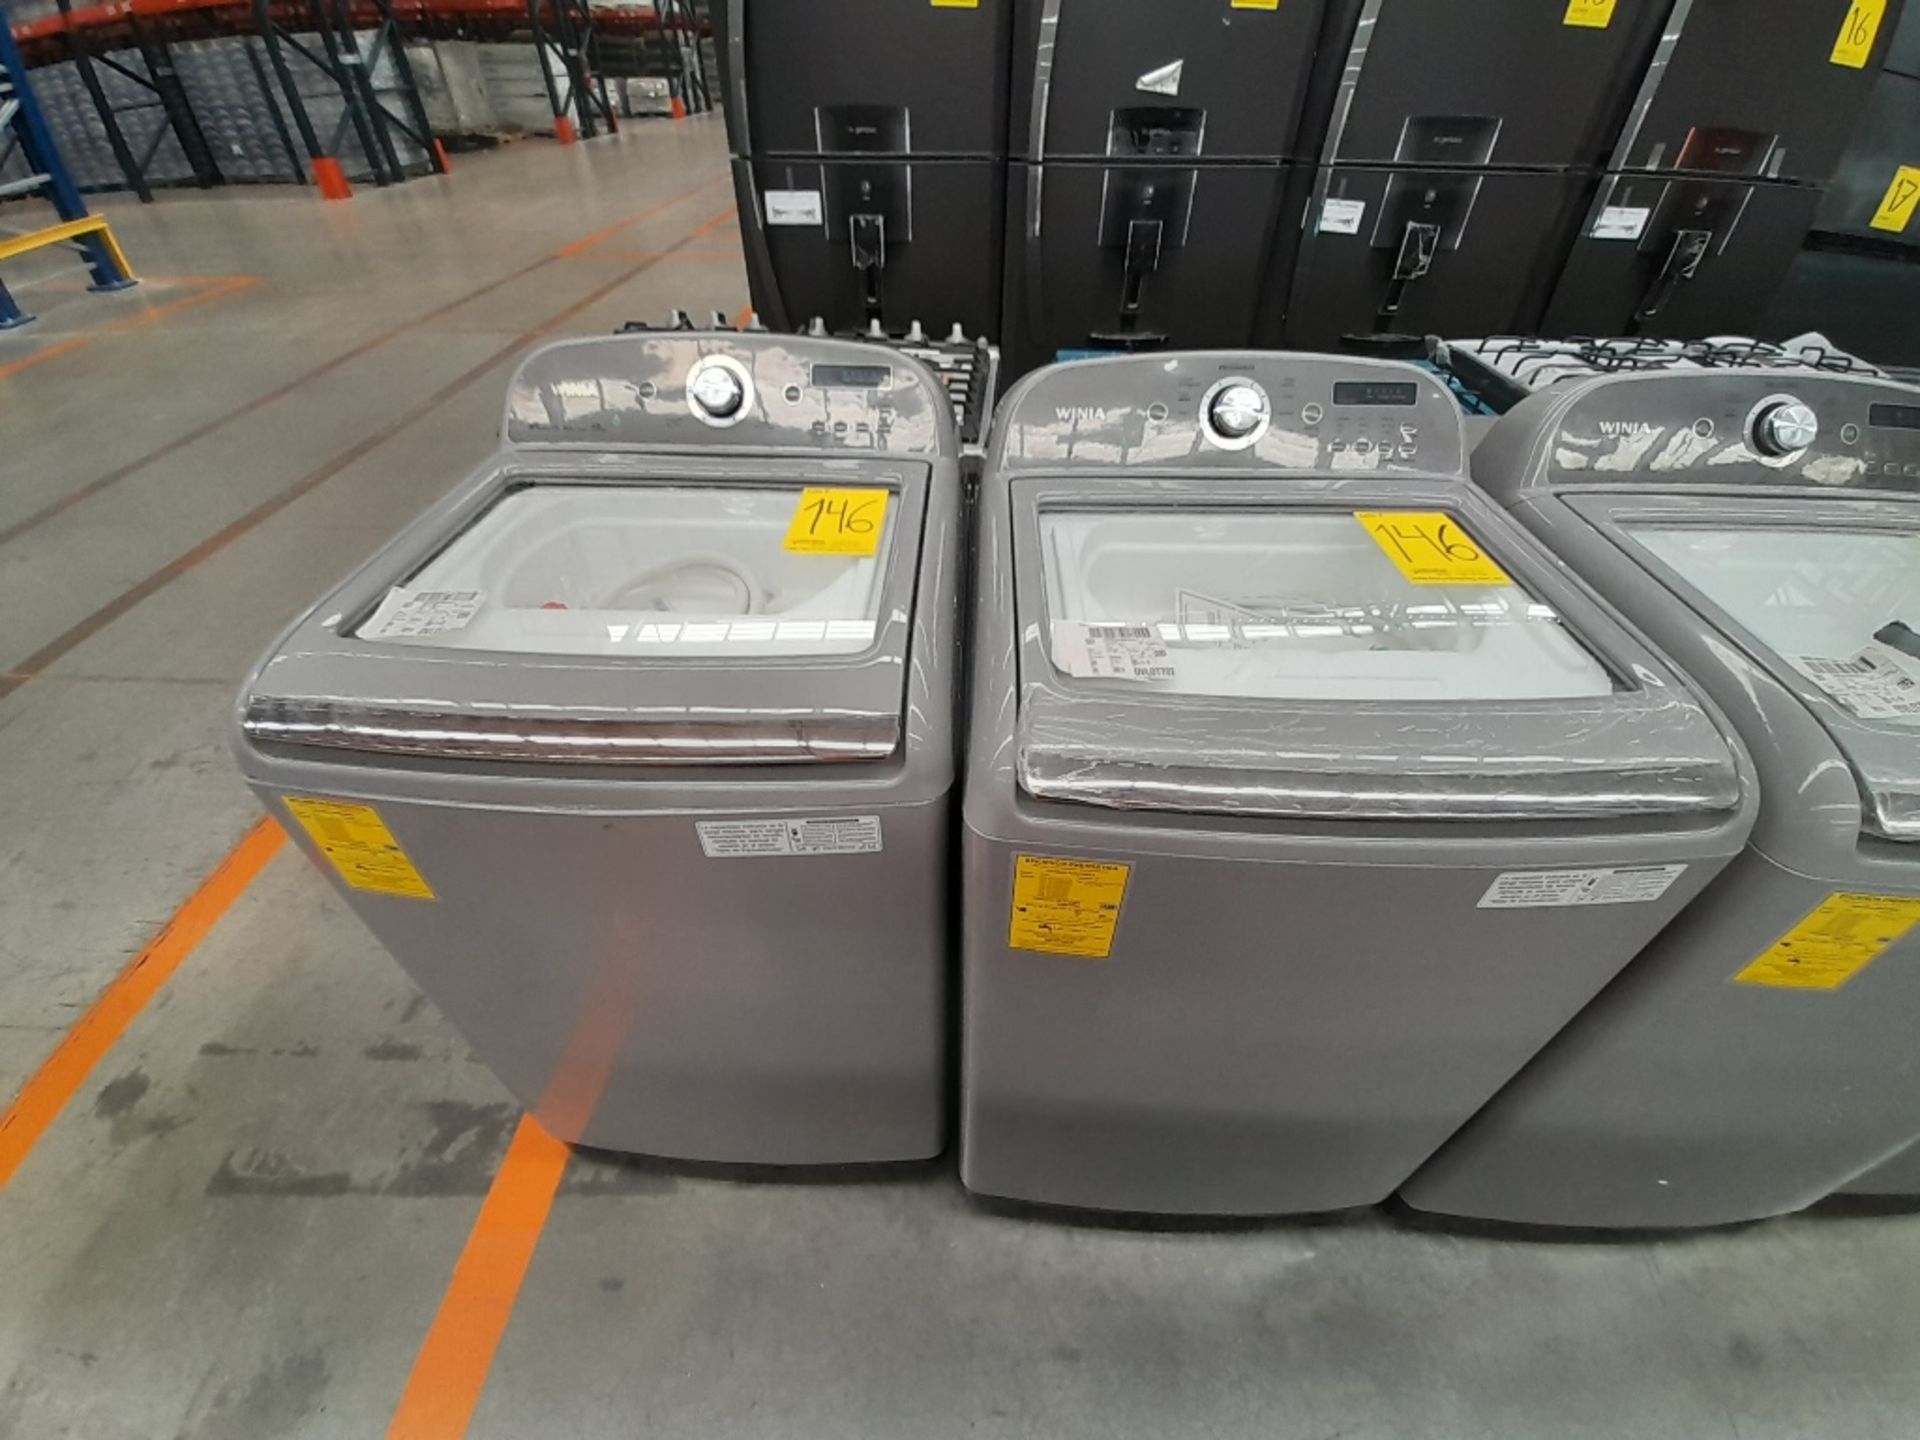 Lote de 2 lavadoras contiene: 1 lavadora de 19 KG Marca WINIA, Modelo DG1B386CWW1, Serie ND, Color